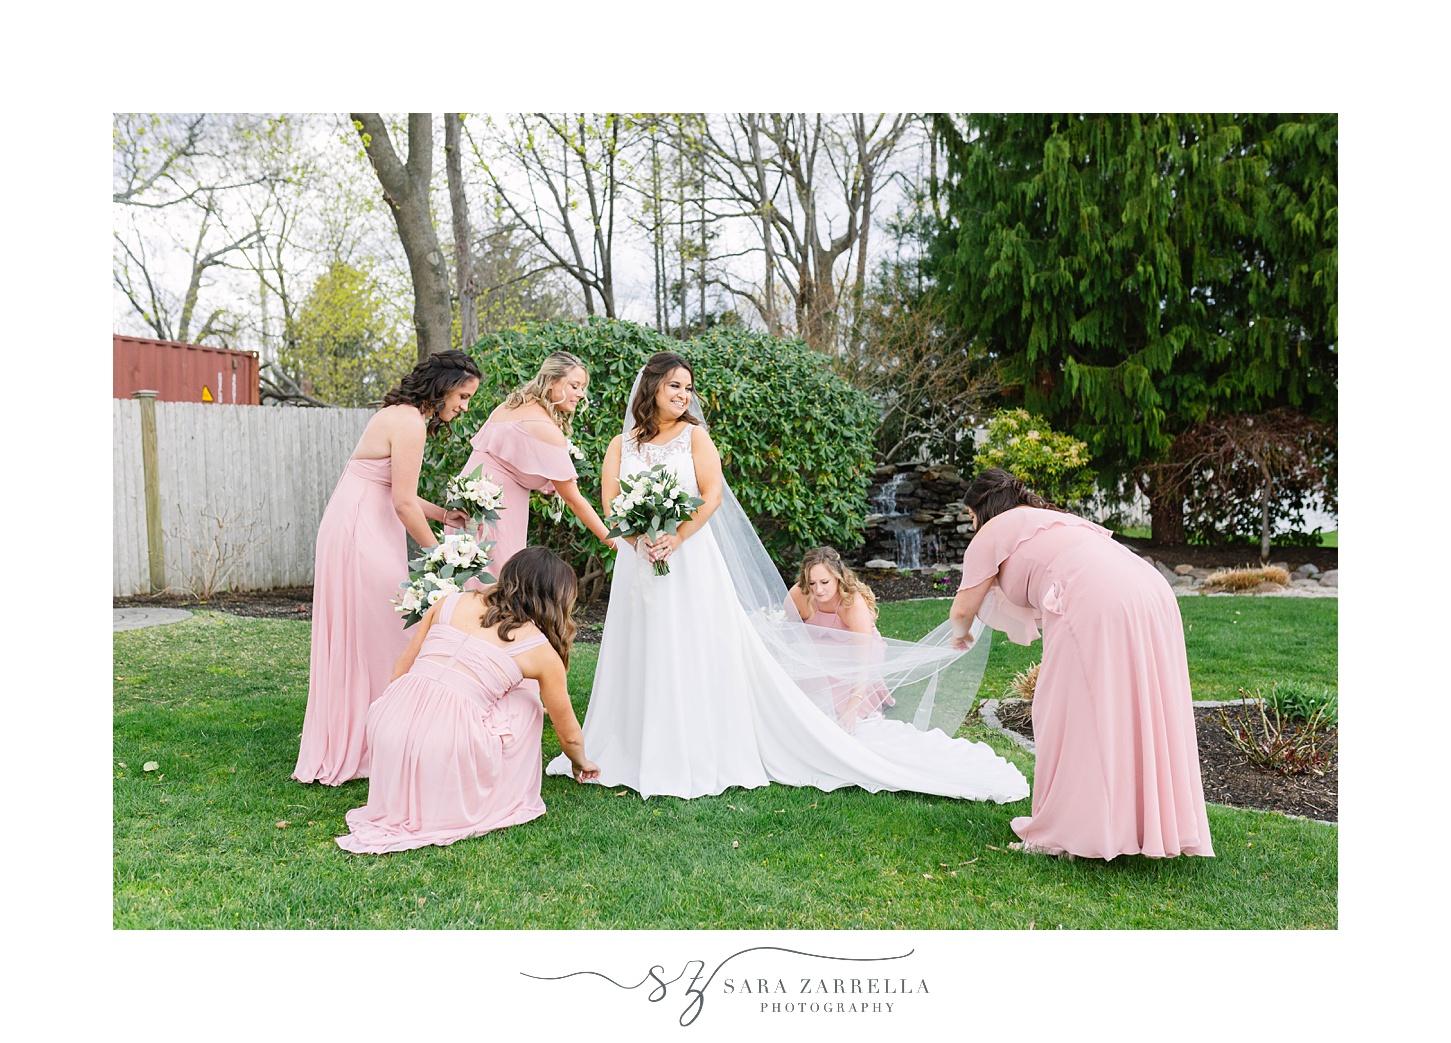 bridesmaids in pale pink adjust bride's dress